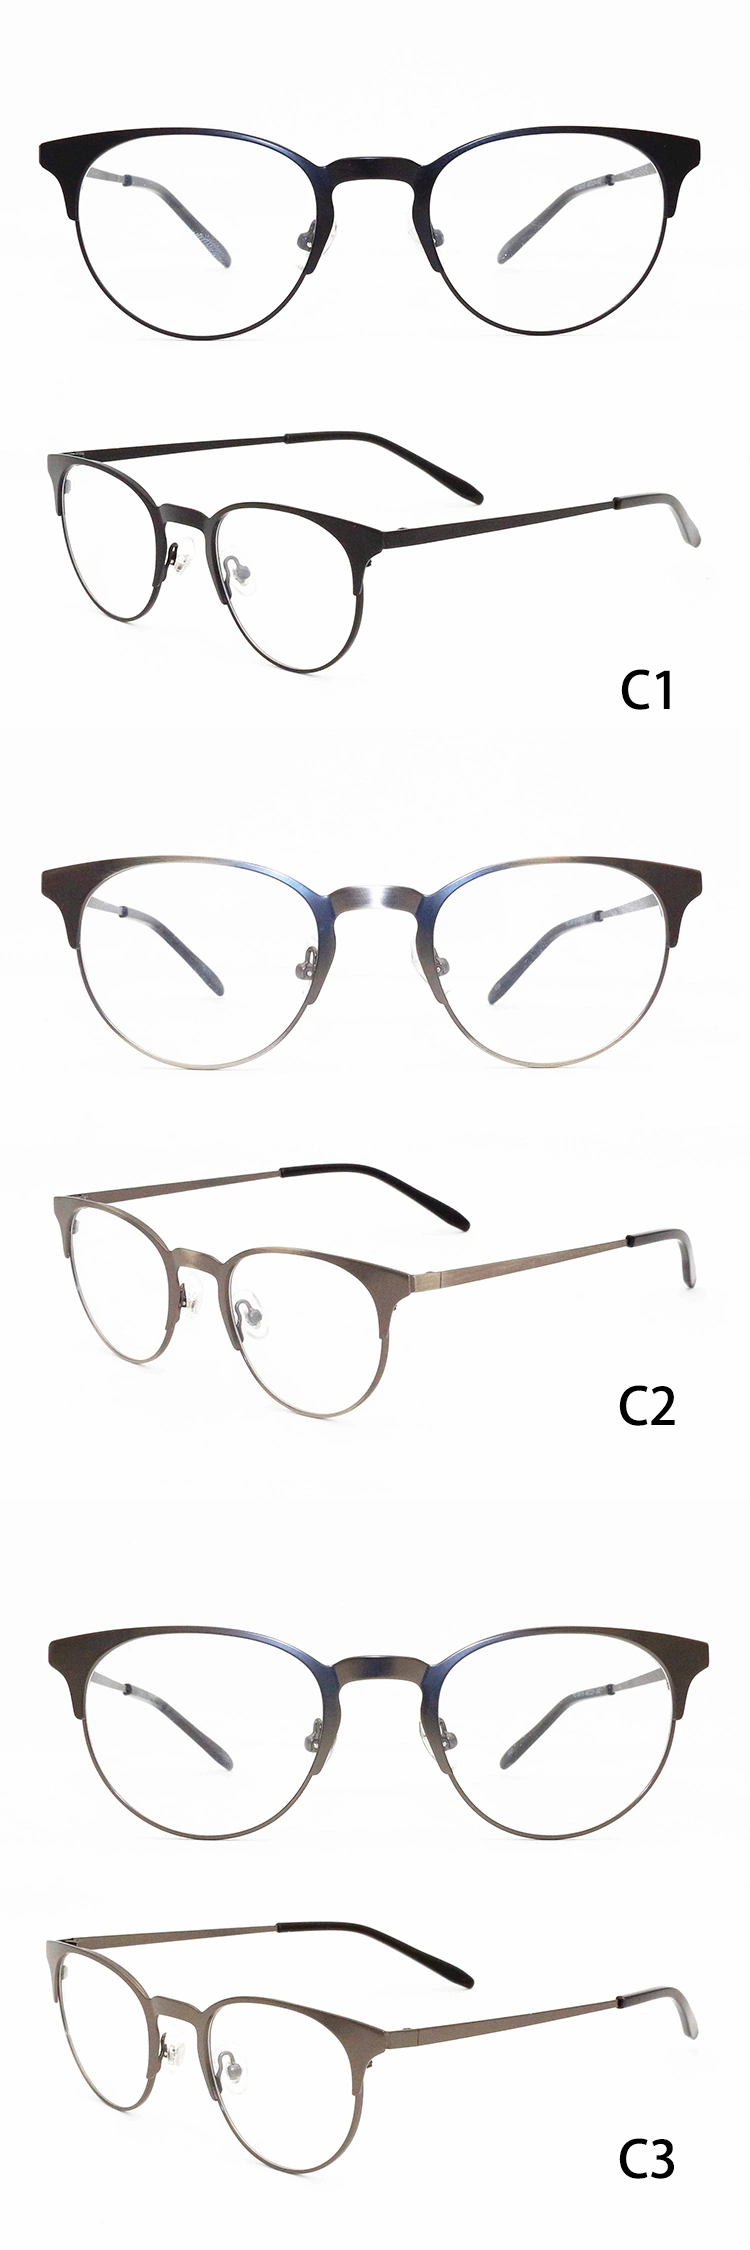 Latest Model Eyeglasses, Circle Lens Glasses, Stainless Steel Eyewear